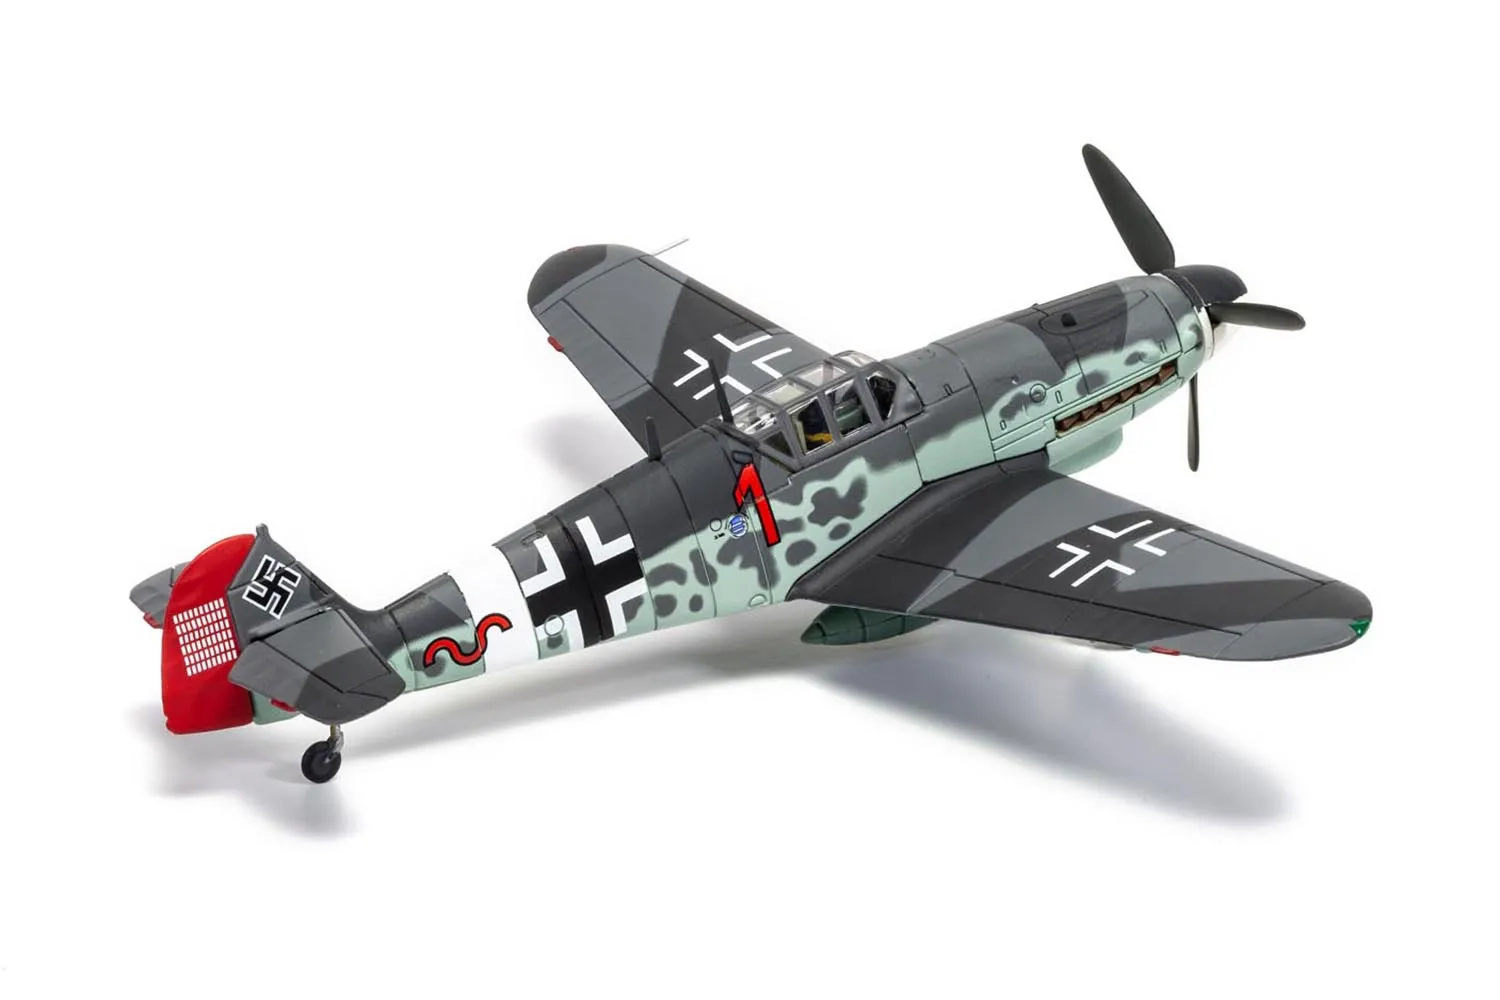 Messerschmitt Bf 109G-2 (Trop) 'Red 1', Hpt. Werner Schroer